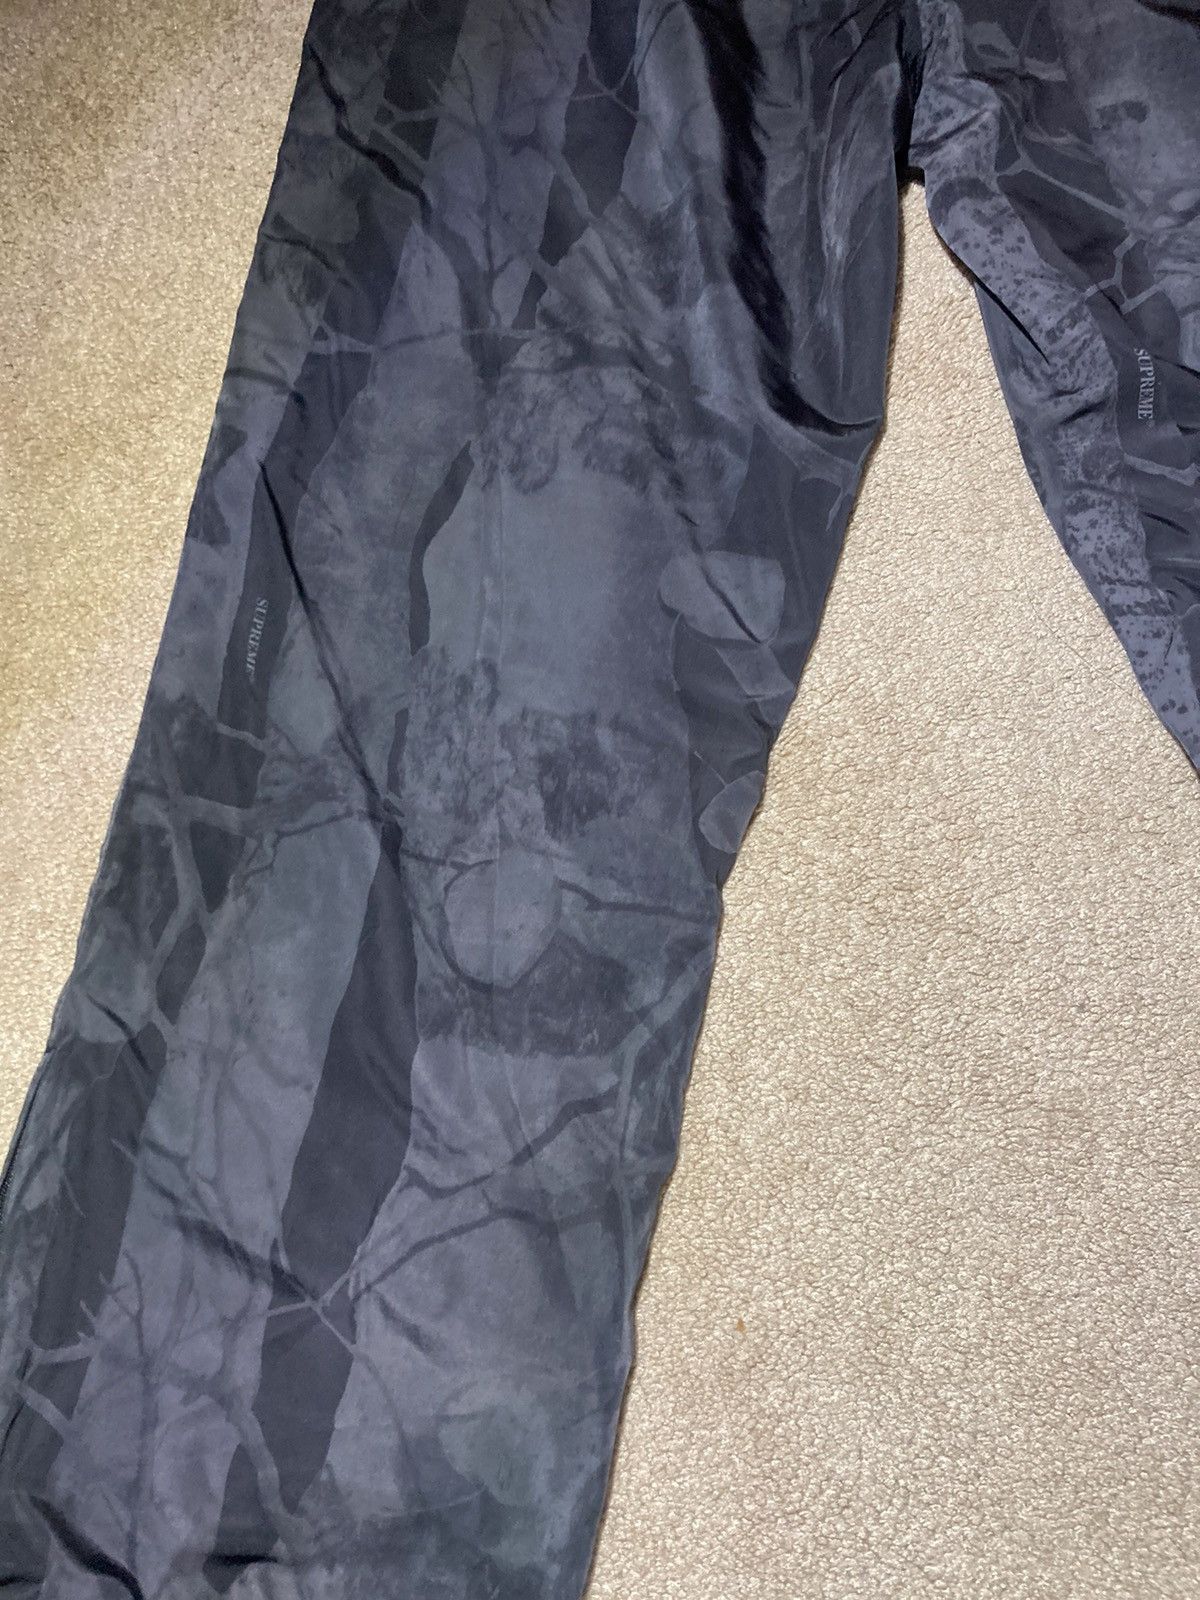 SS14 Supreme Aspen Camo Pants Woodland Camouflage 2014 Track - 10